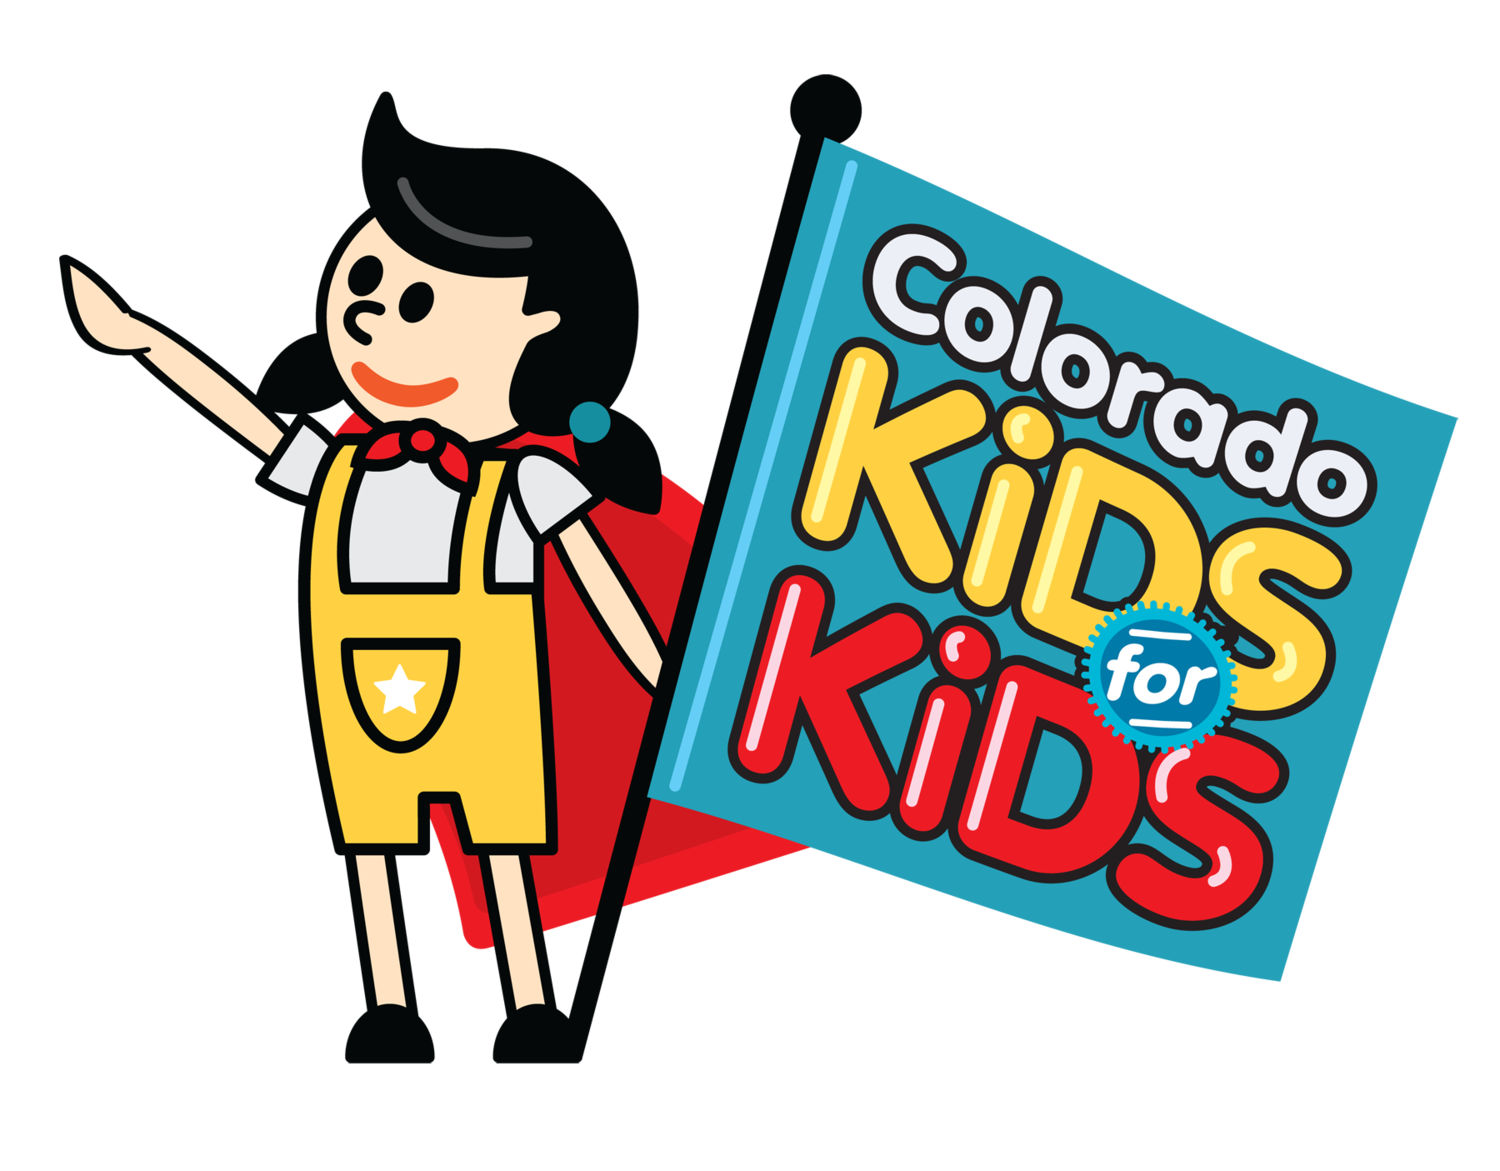 Colorado Kids for Kids